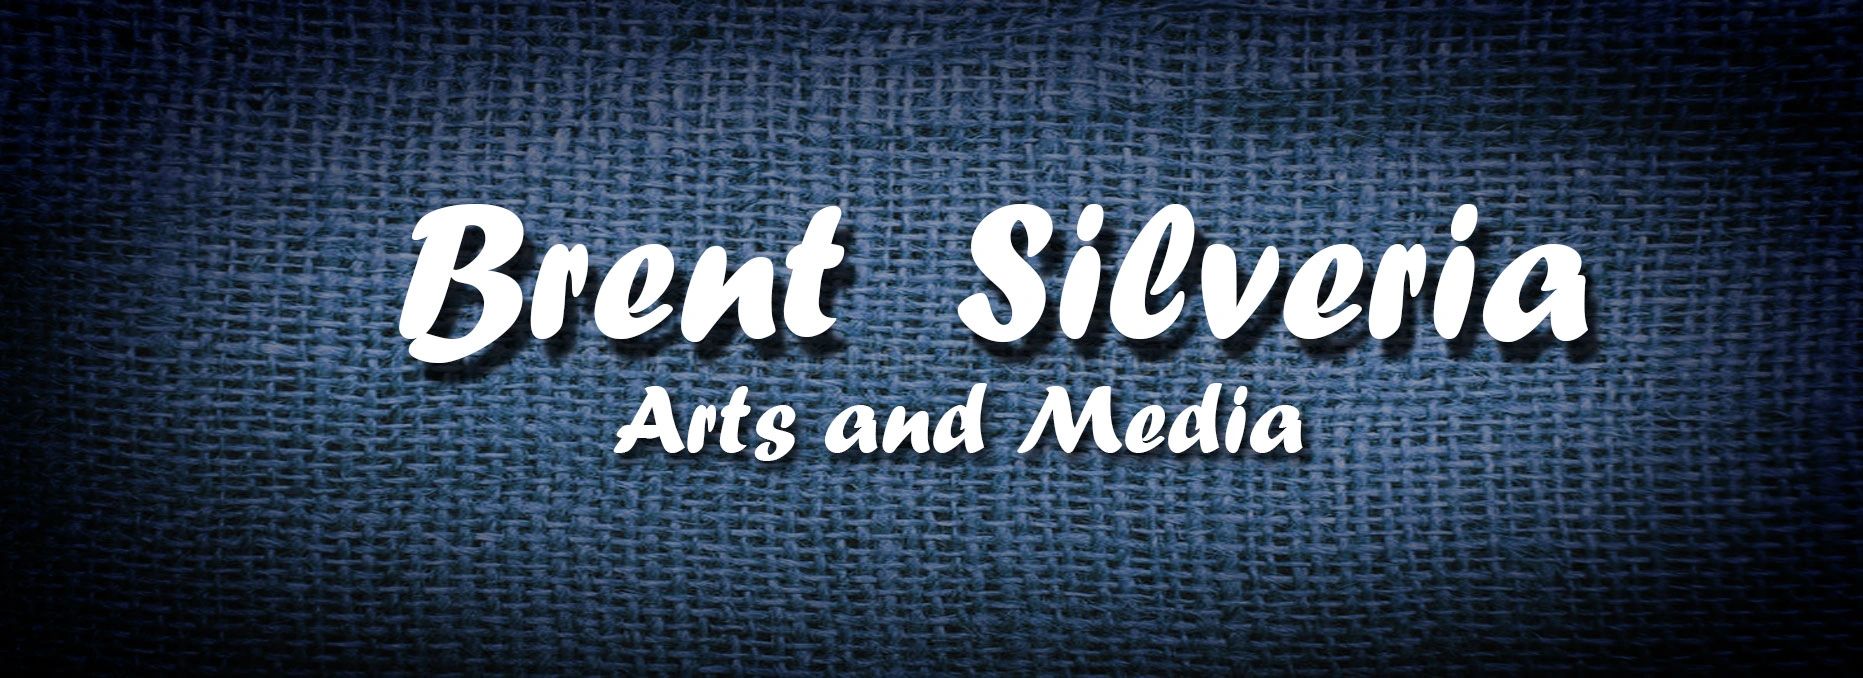 Silveria Arts and Media